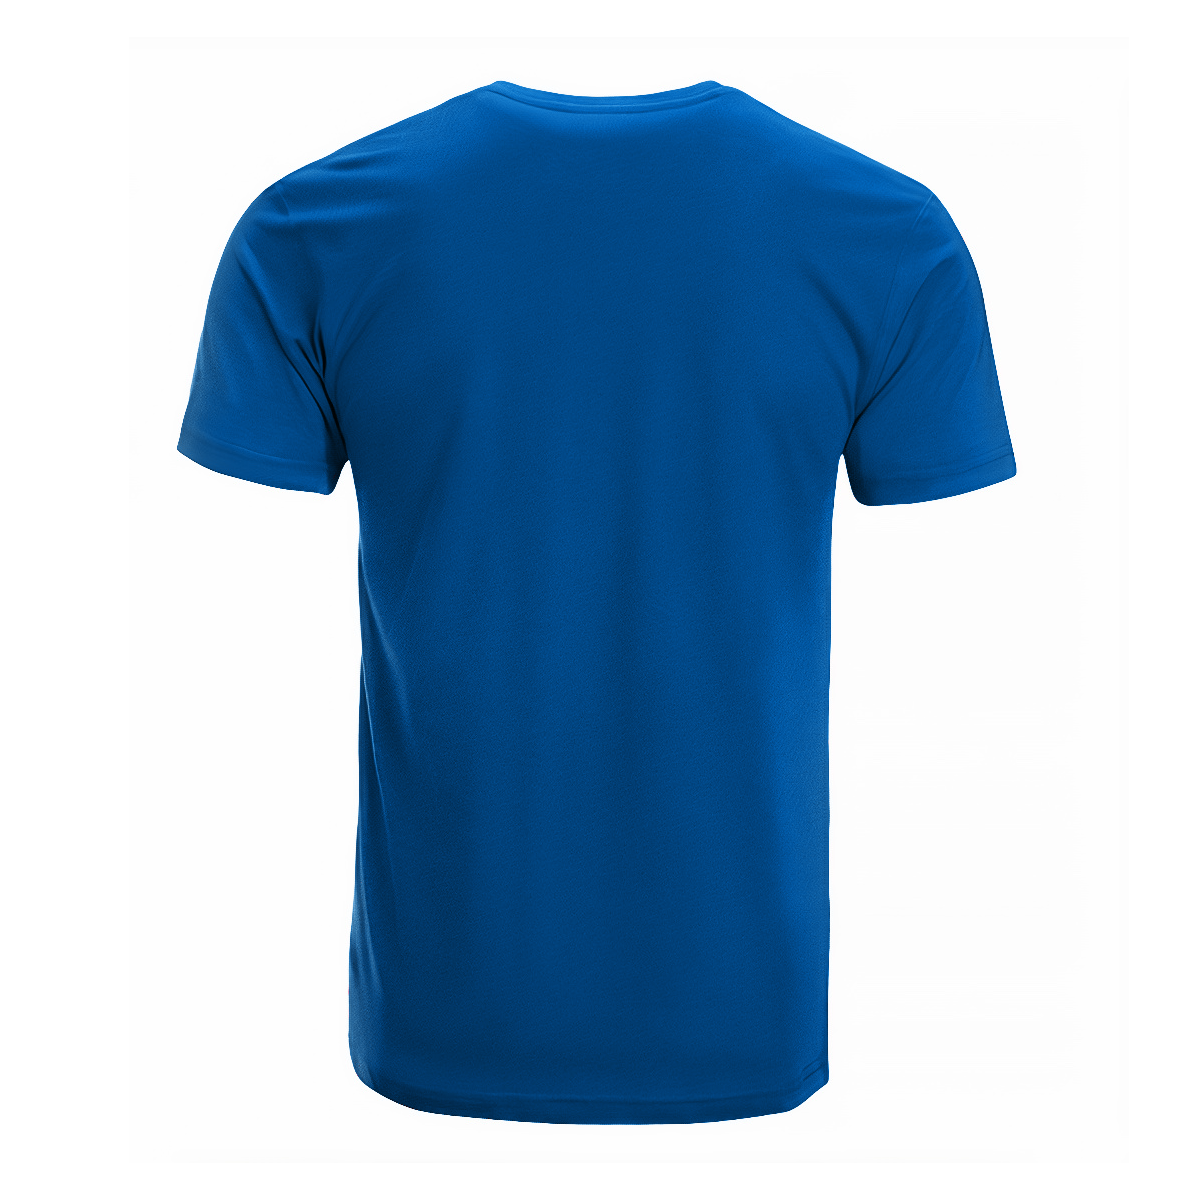 Dalrymple Tartan Crest T-shirt - I'm not yelling style